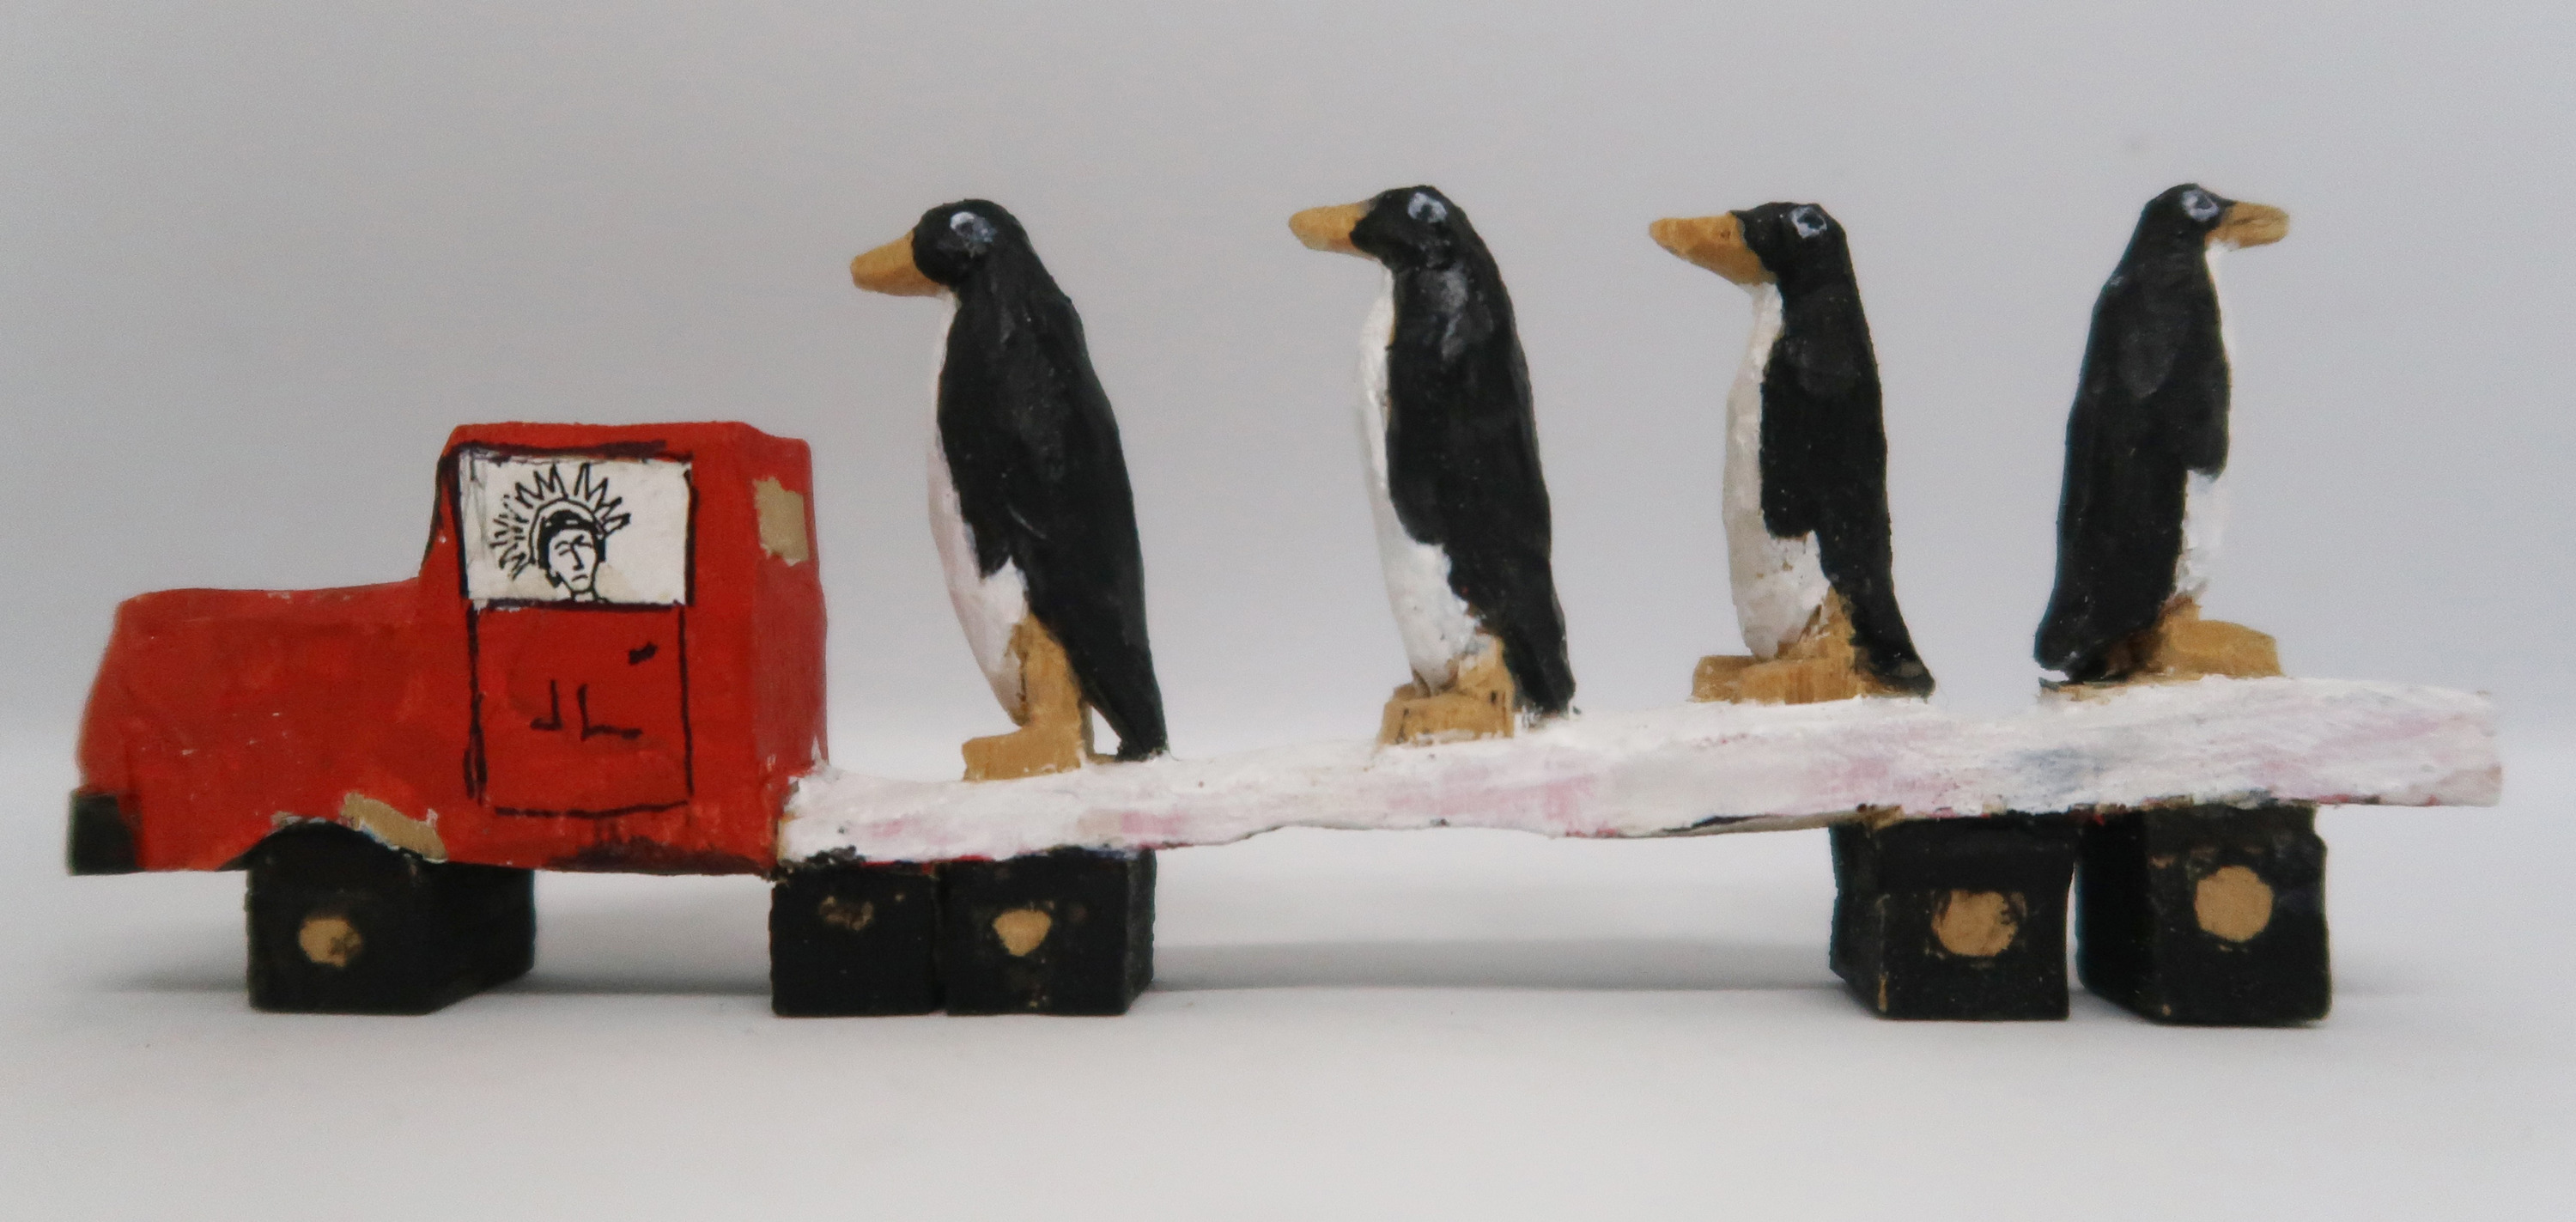 Jlovato taos art company woodcarving miniatures truck 4 penguins ne20cv